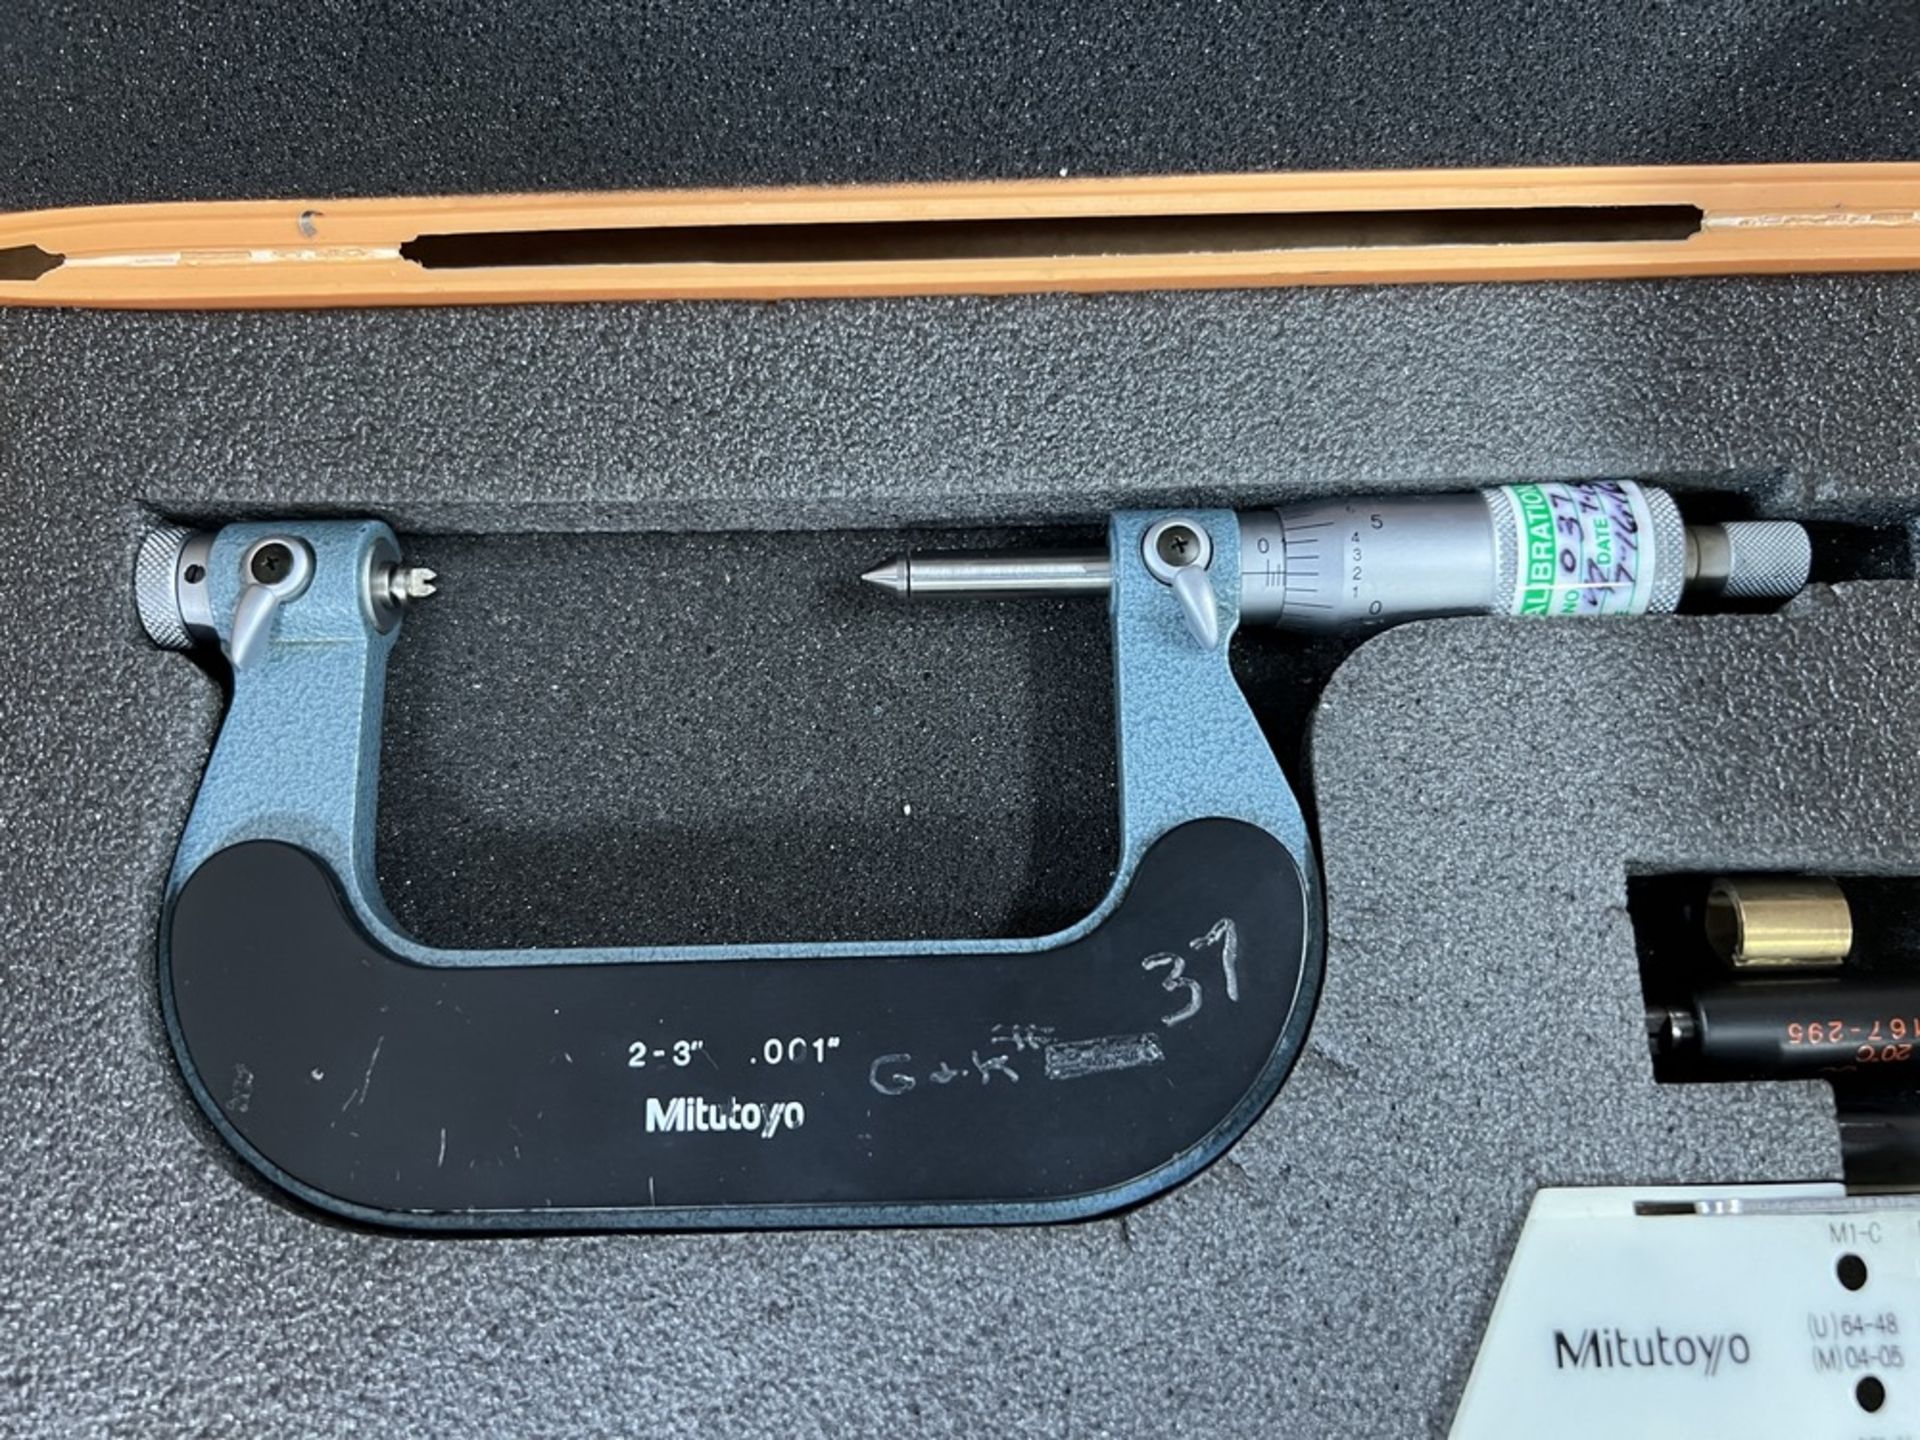 Mituroyo 1-2" Blade Micrometer & Mitutoyo 2-3" Thread Micrometer - Image 6 of 7